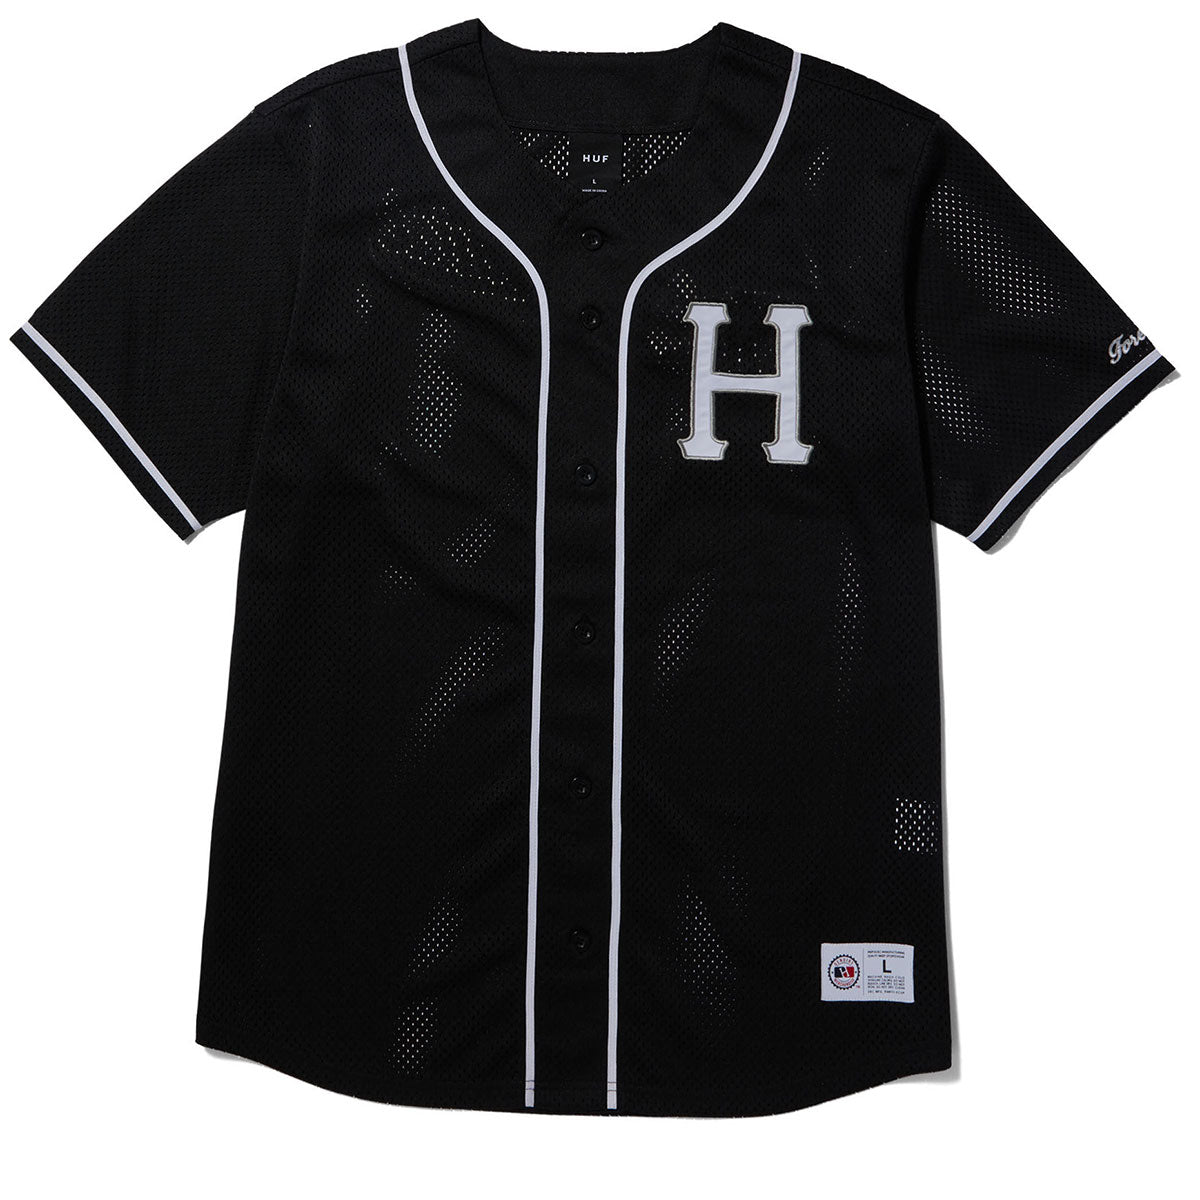 HUF Crackerjack Baseball Jersey - Black image 1